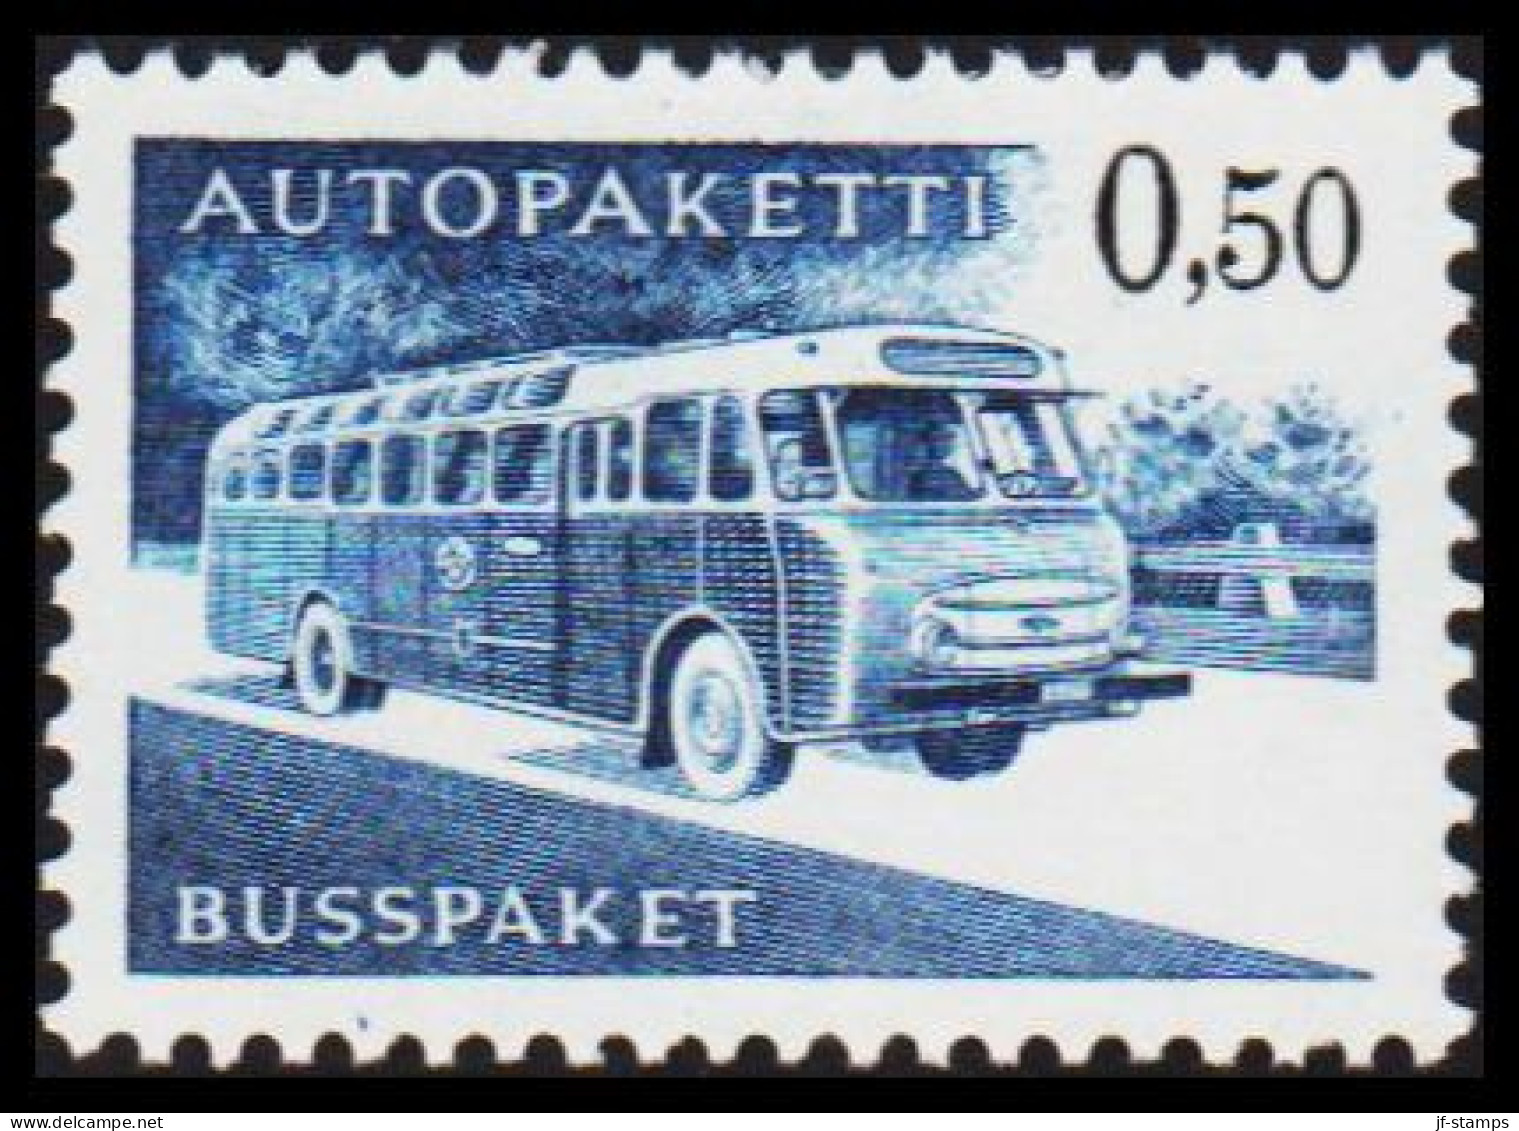 1963-1980. FINLAND. Mail Bus. 0,50 Mk. AUTOPAKETTI - BUSSPAKET Never Hinged. Normal Paper.... (Michel AP 12x) - JF535631 - Envios Por Bus